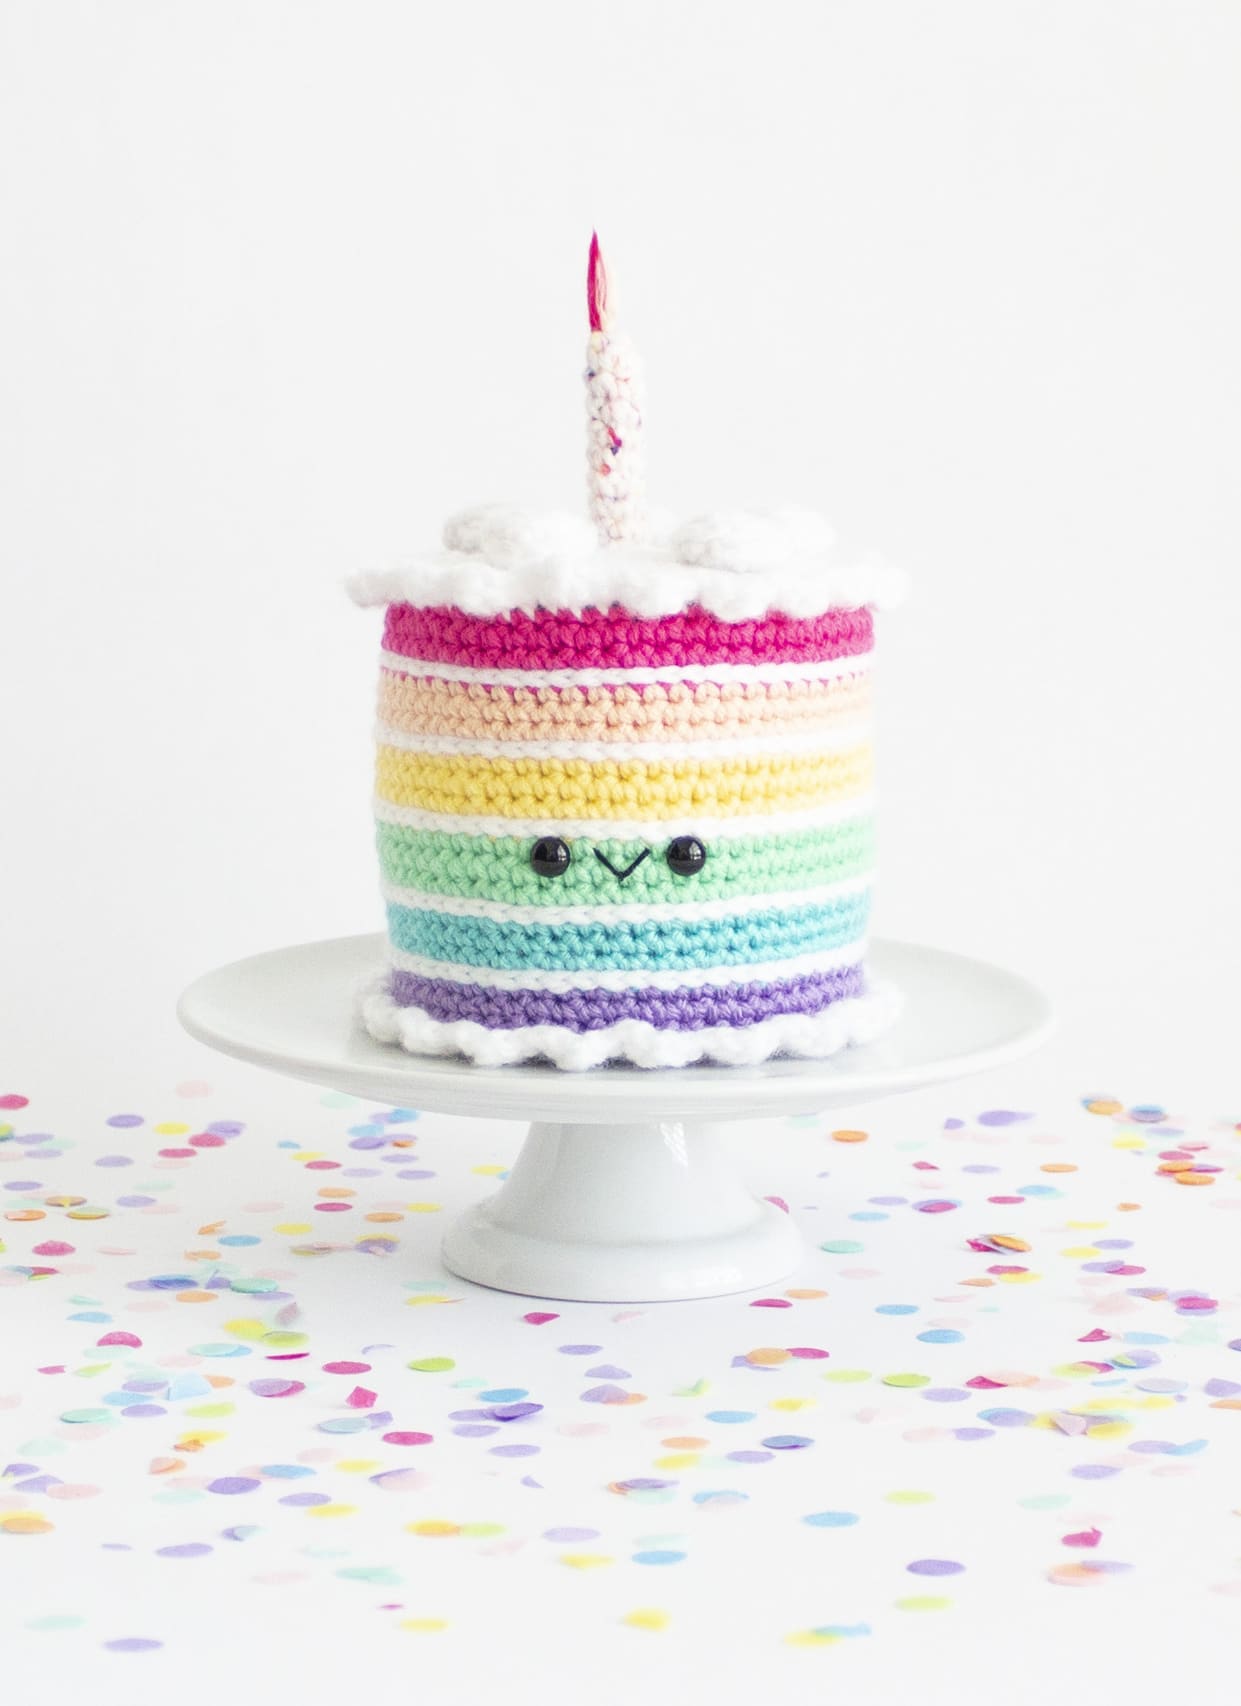 learn how to make a crocheted cake • craft • frankie magazine • australian  fashion magazine online